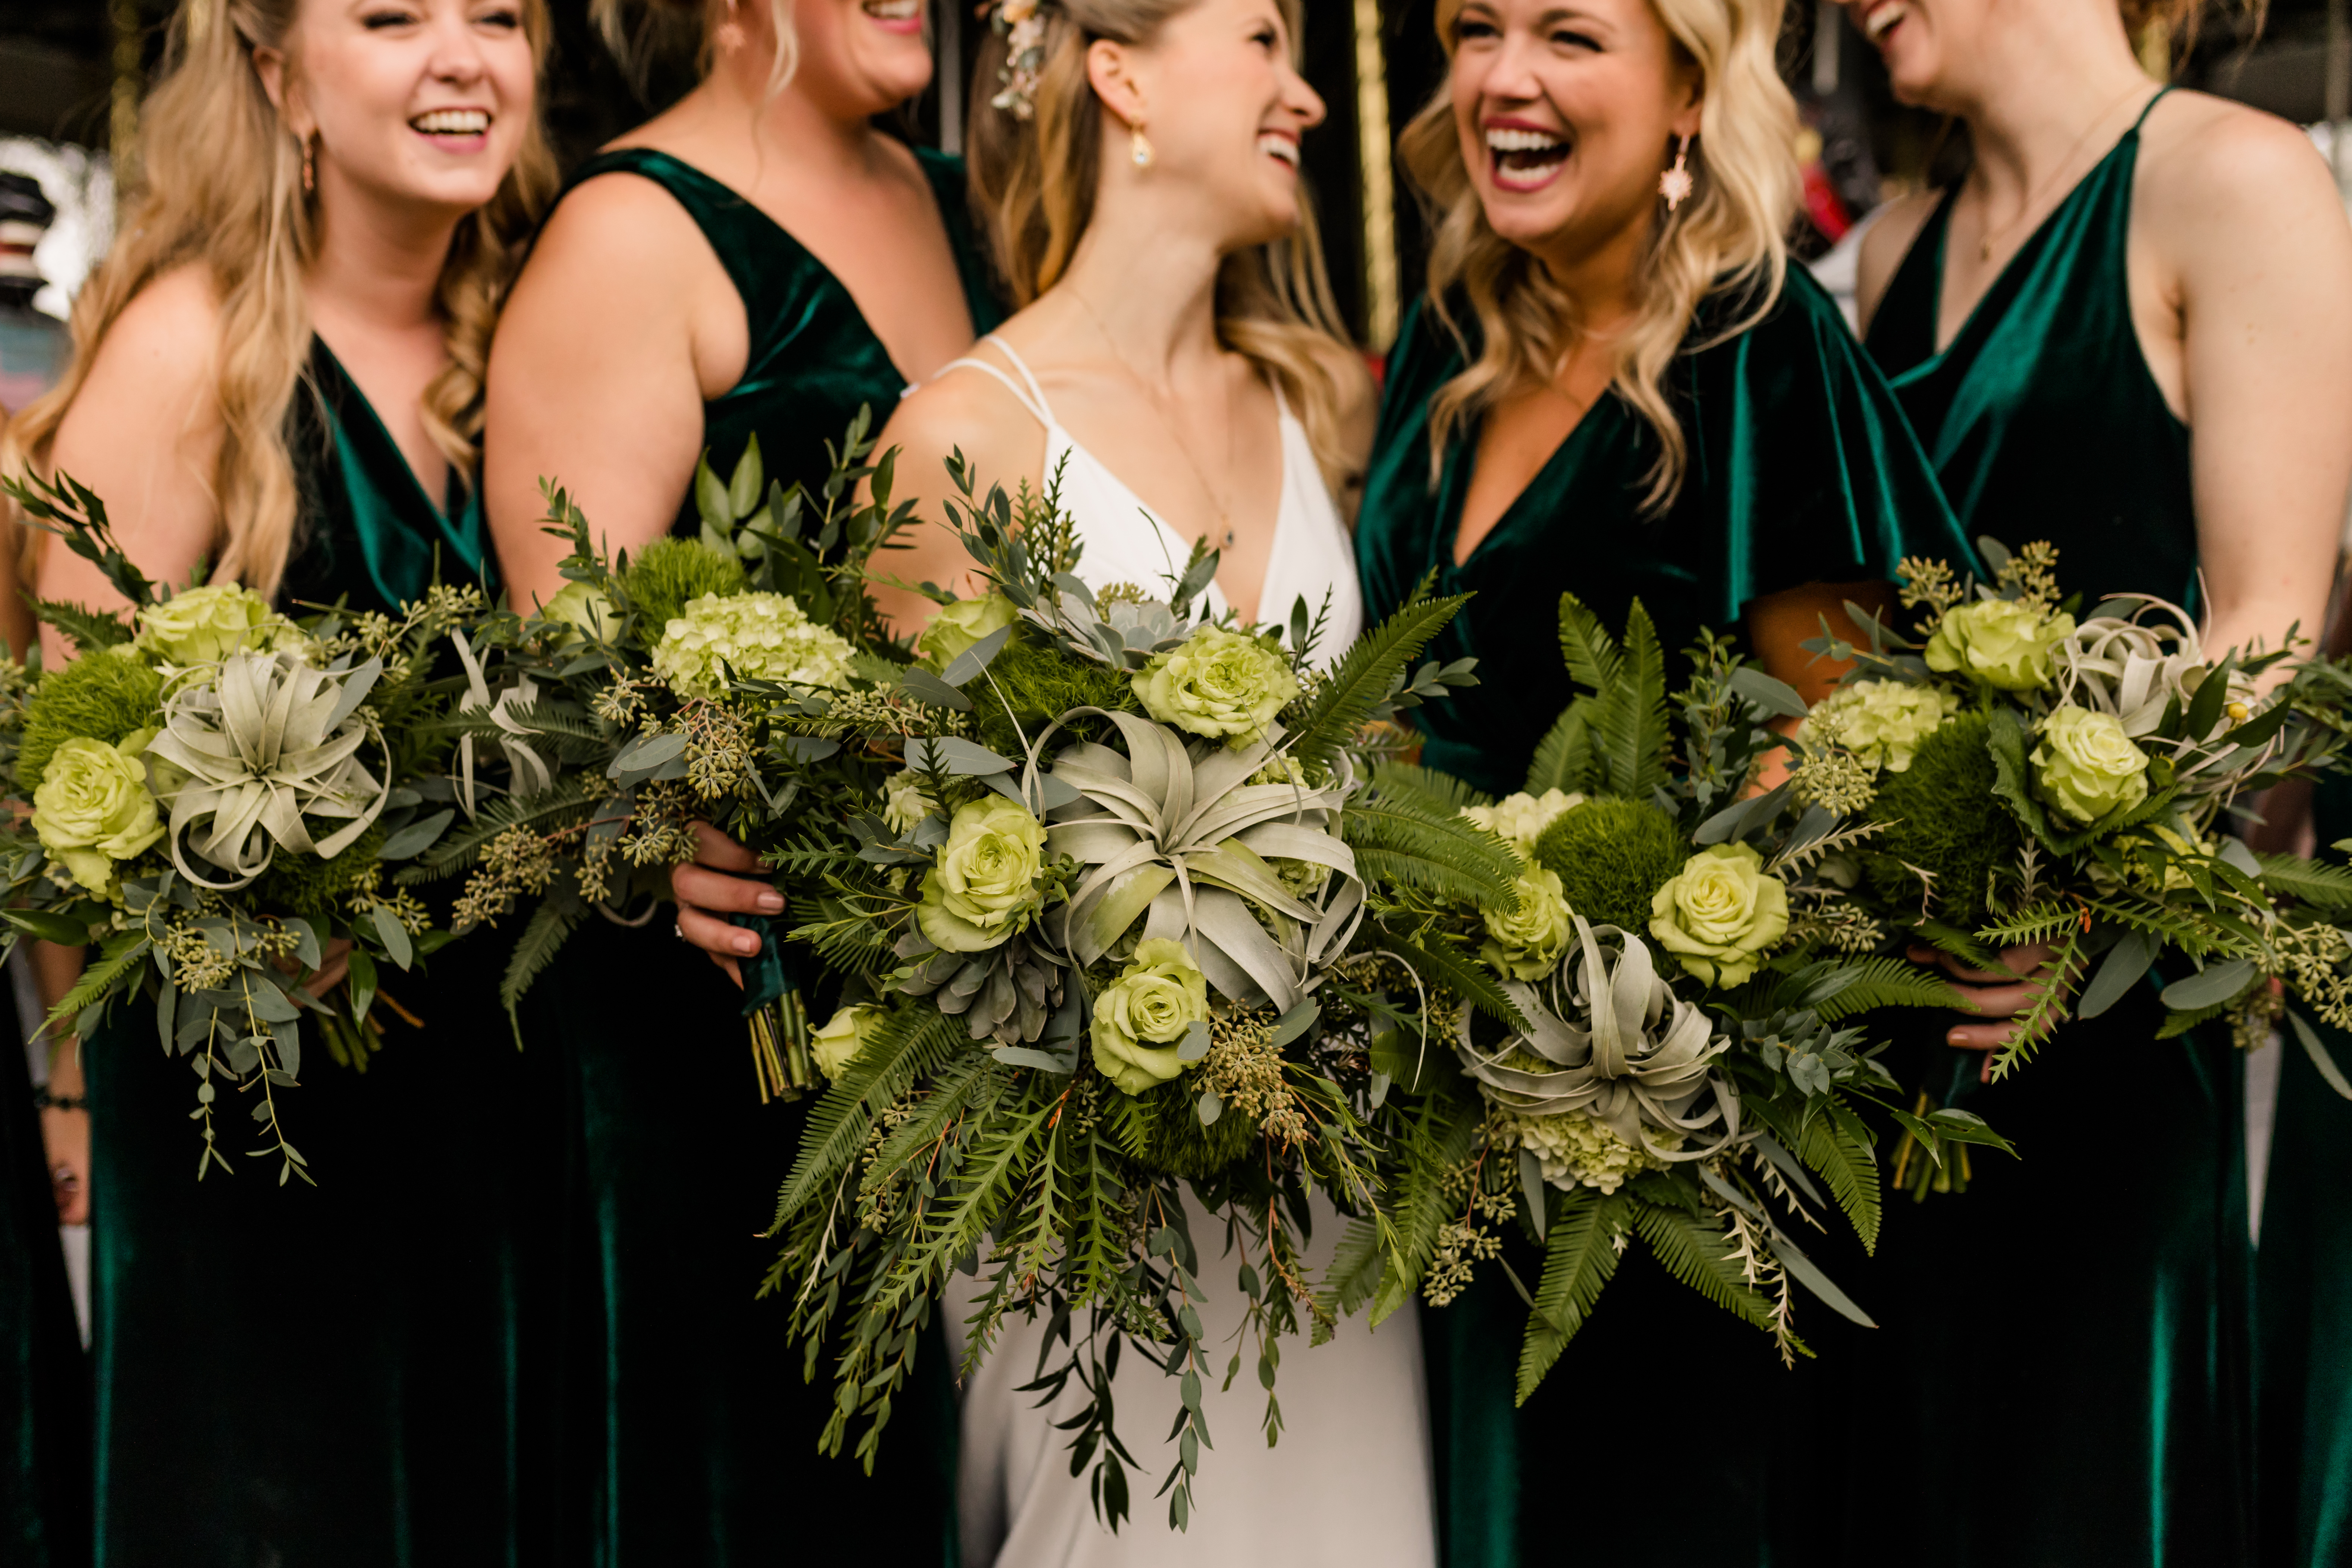 emerald velvet bridesmaid dress